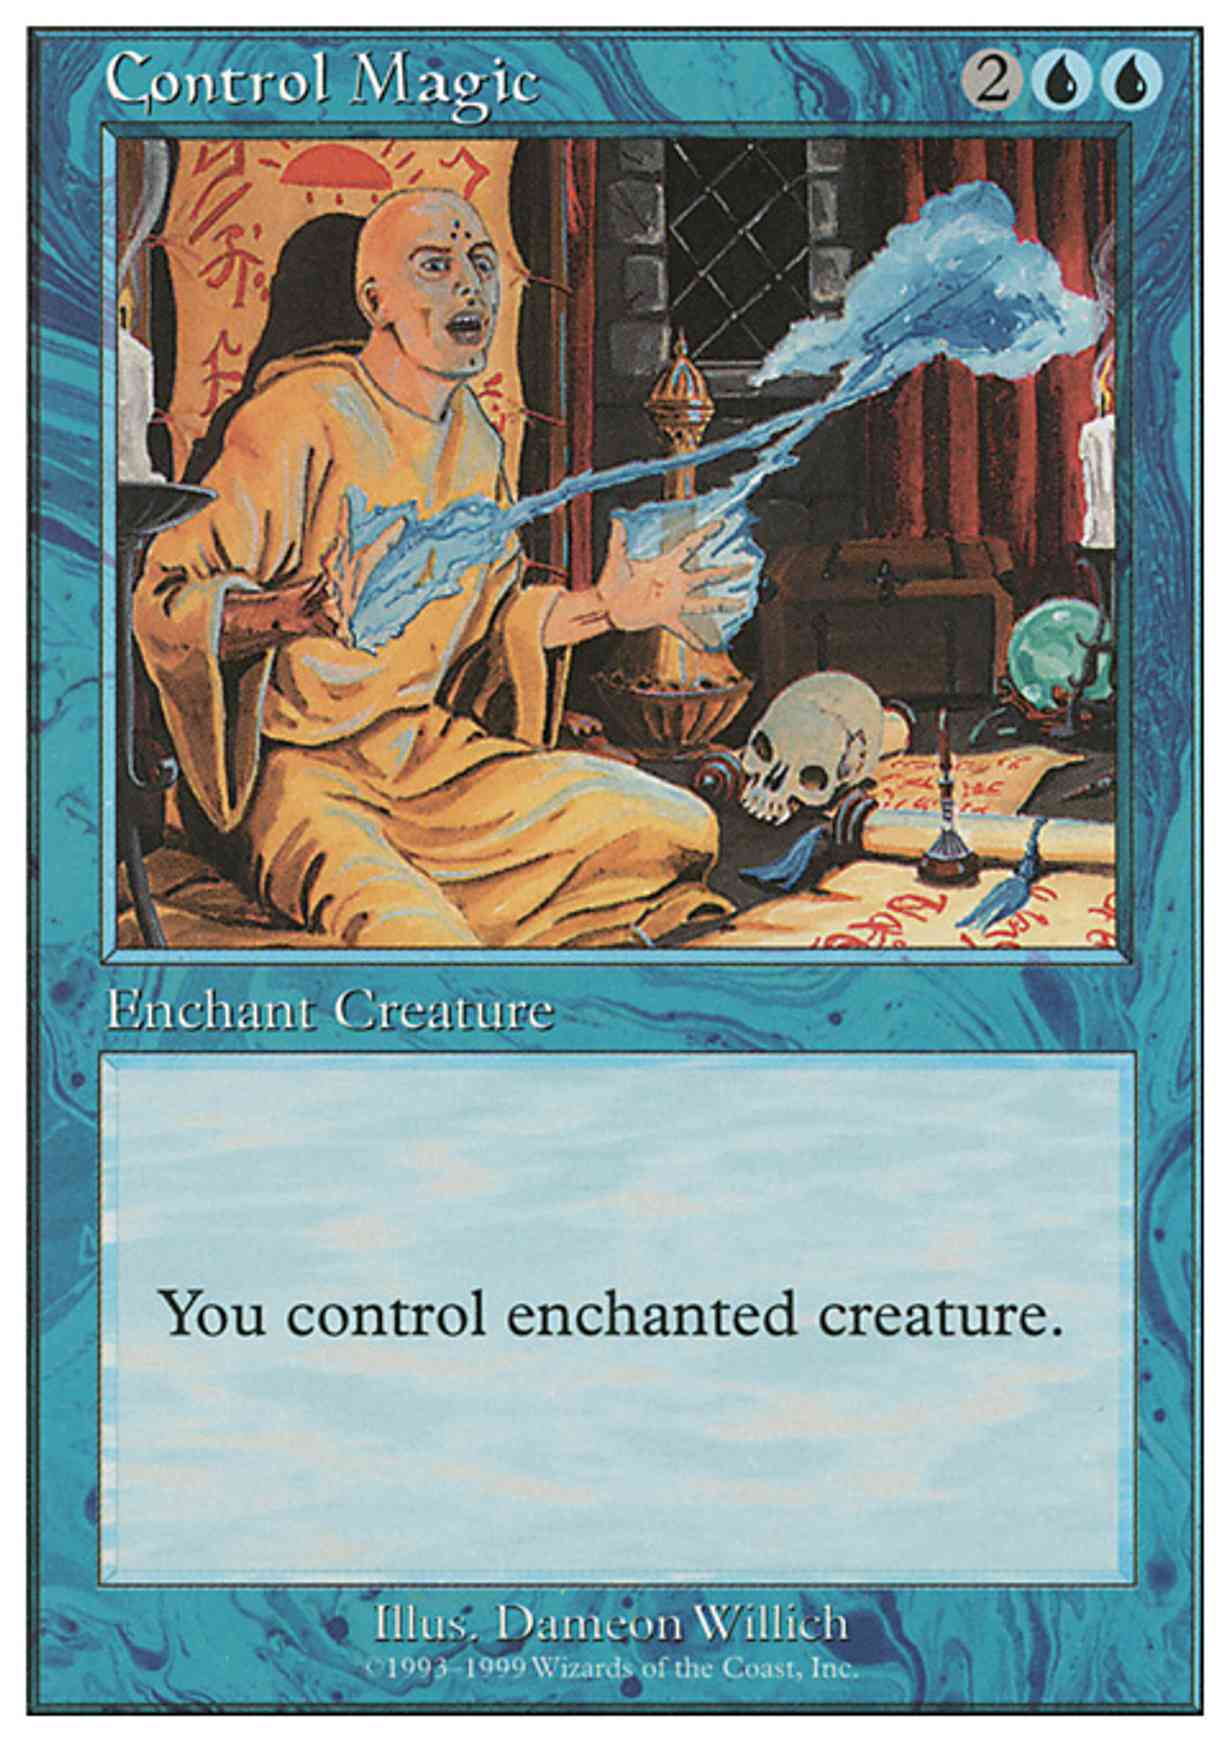 Control Magic magic card front